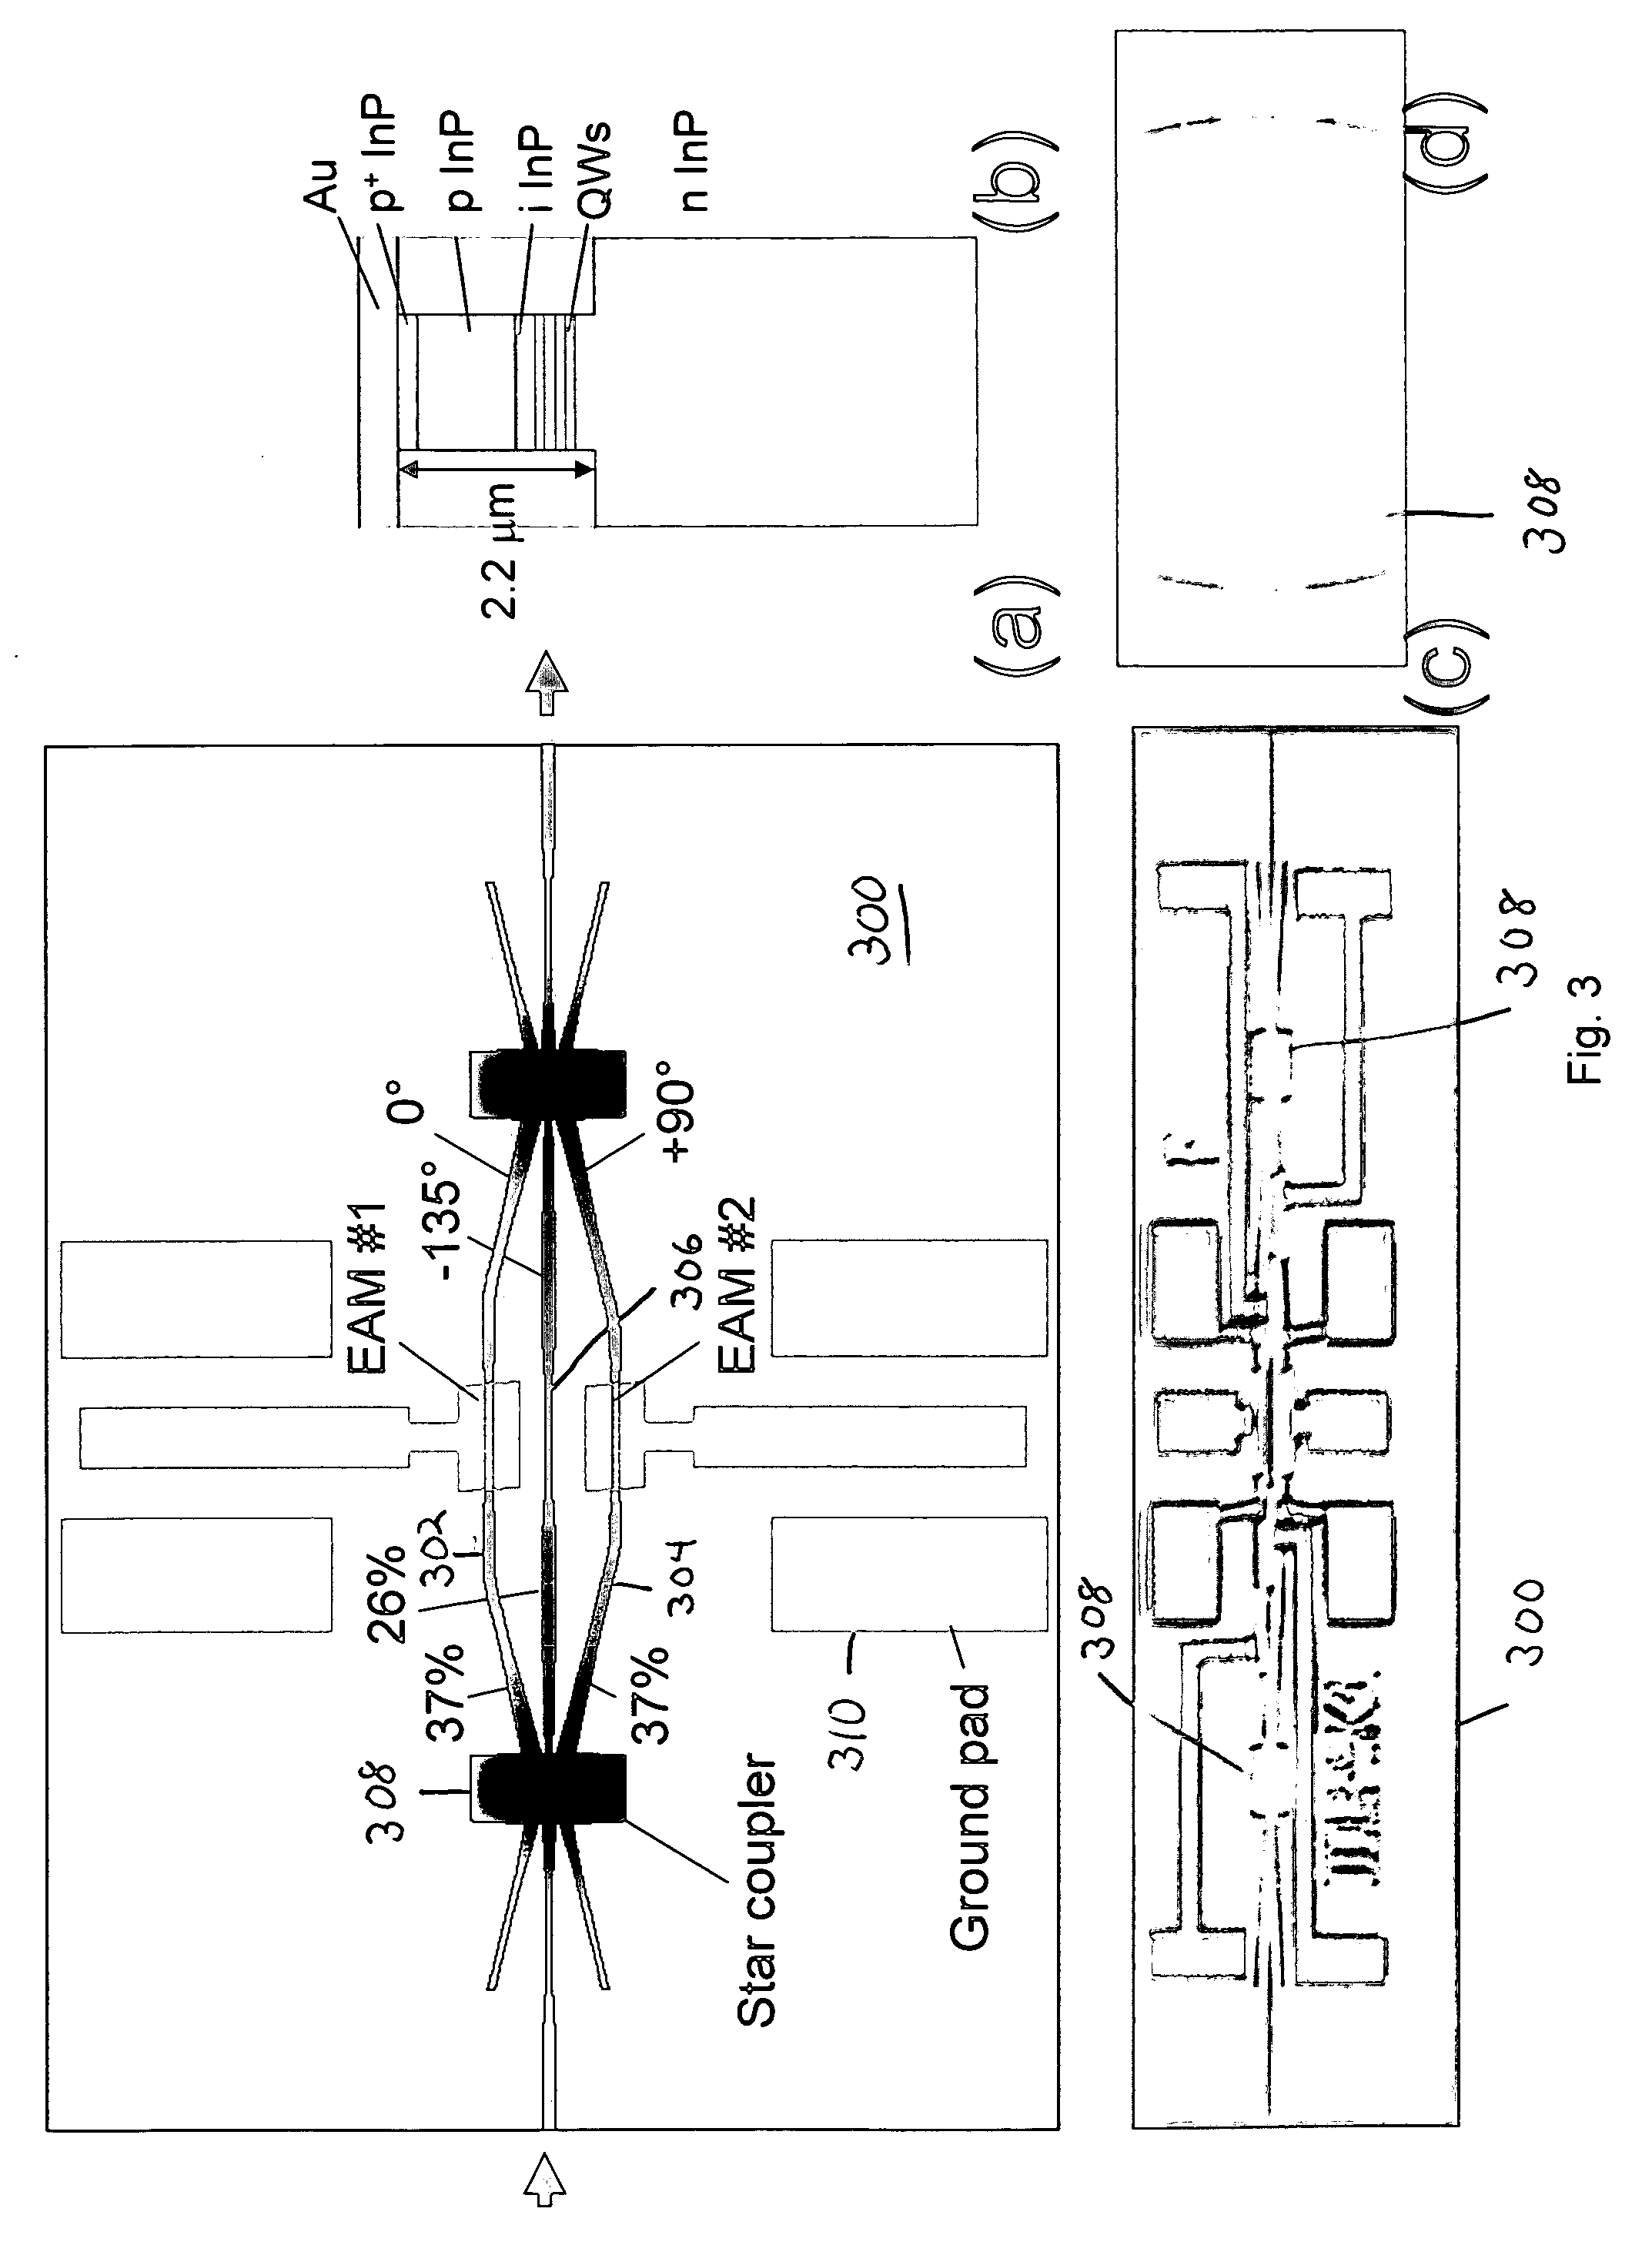 Compact optical modulator